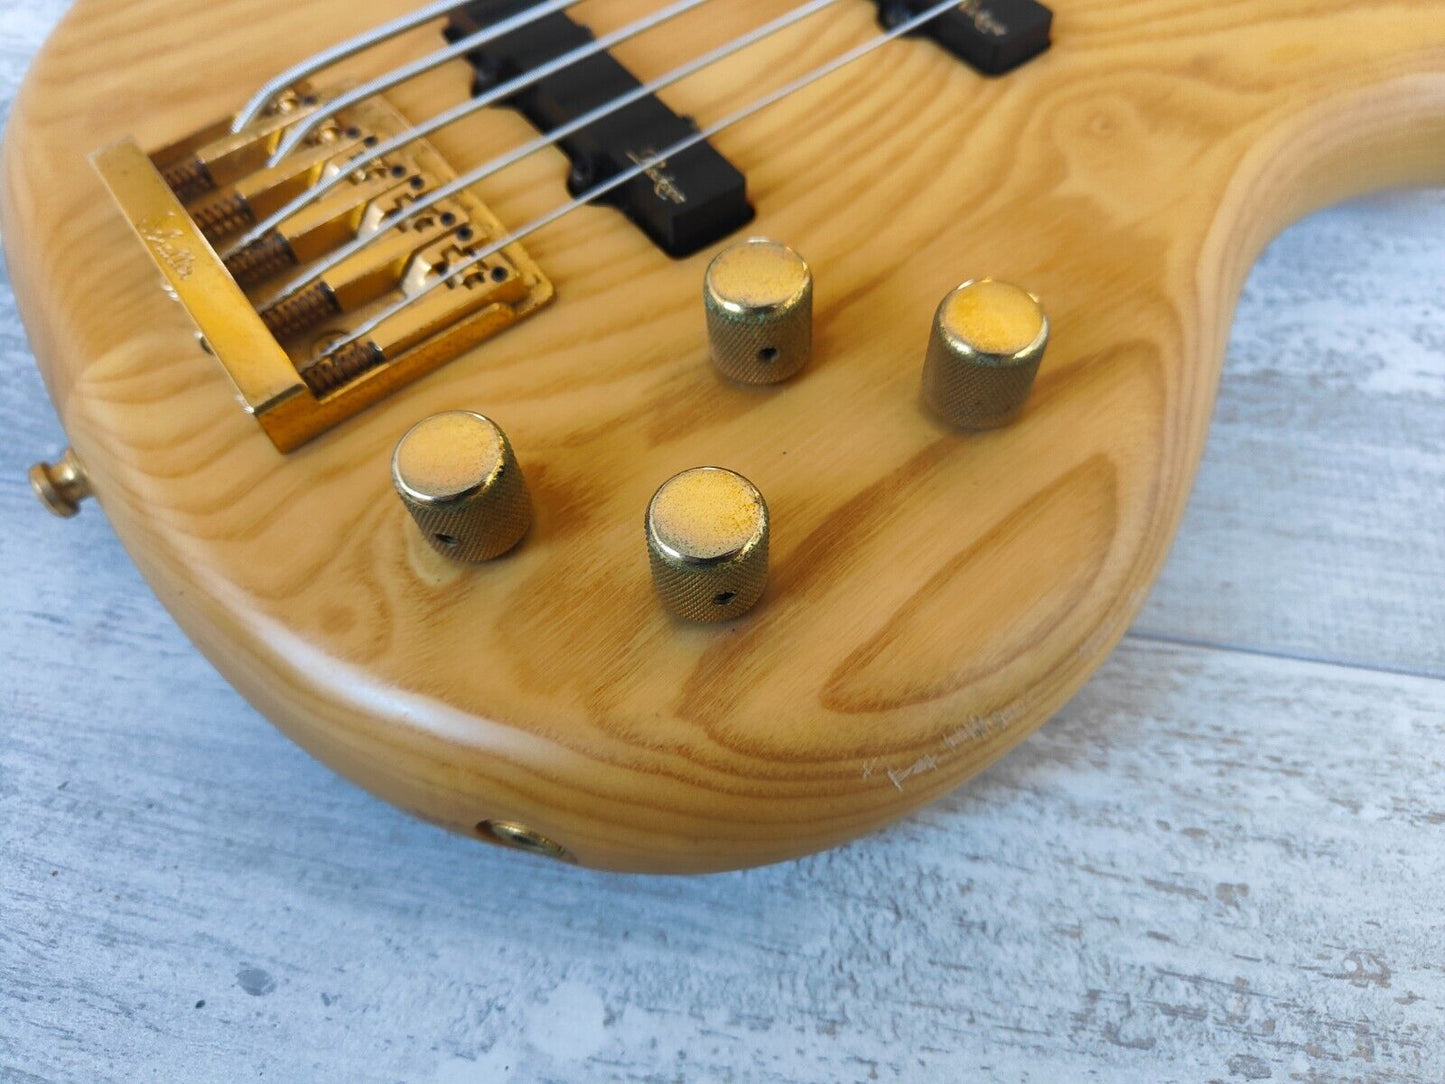 1989 Rockoon Japan (by Kawai) RB-855S Fretless 5-String Bass (Natural)